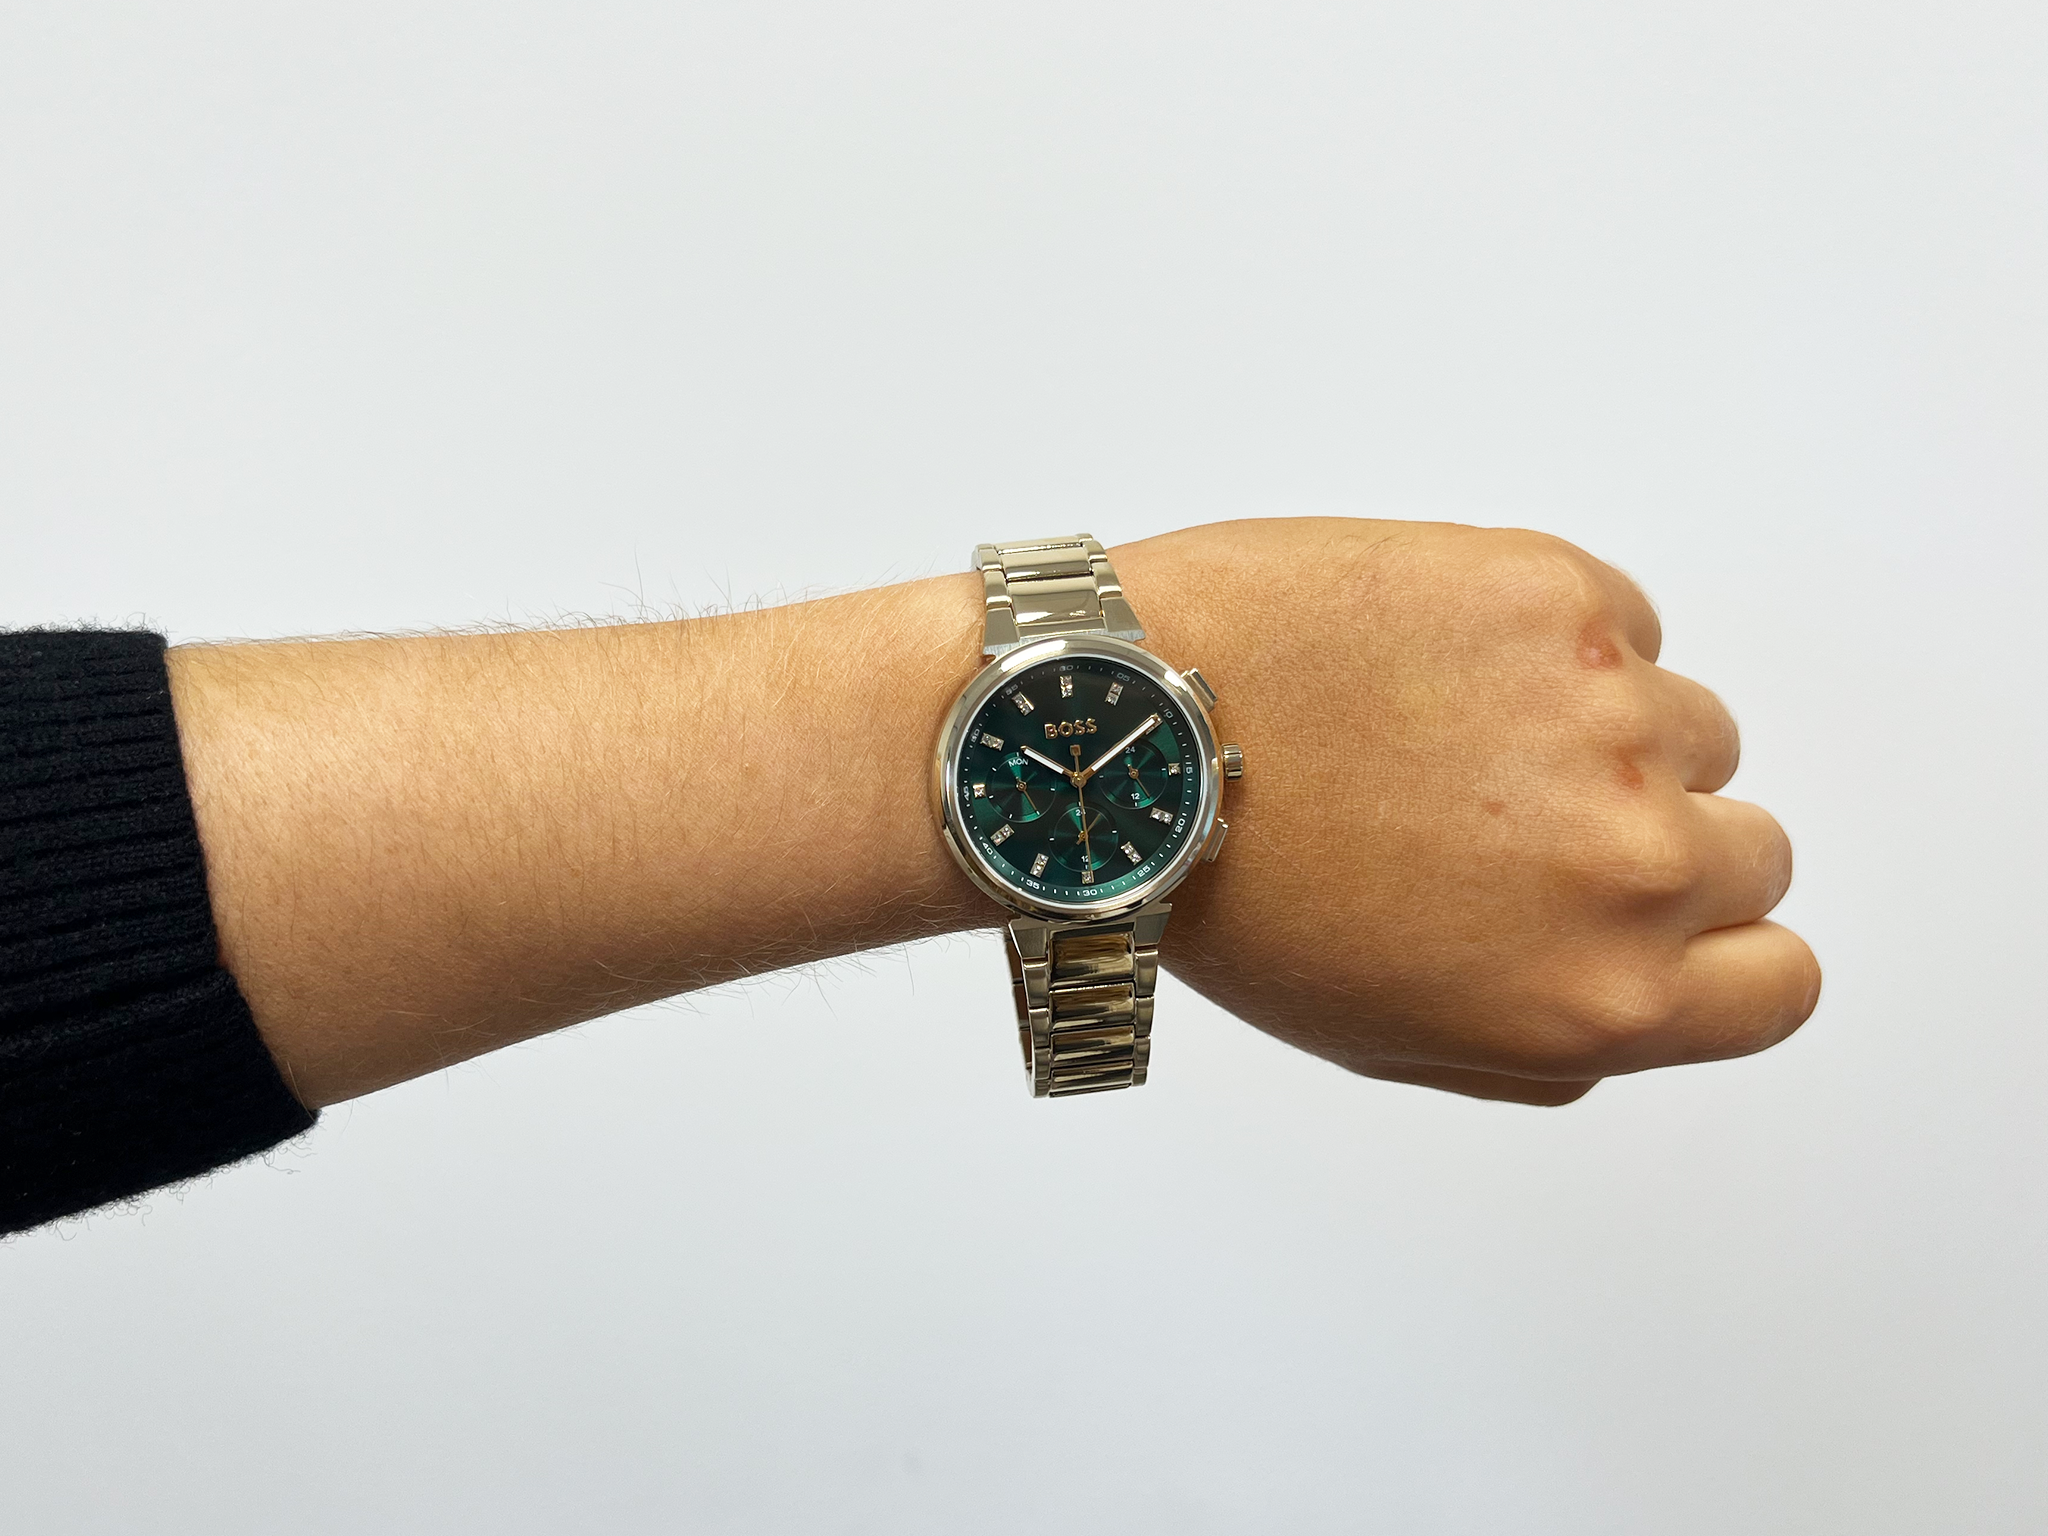 Hugo Boss women's one green chronograph dial watch